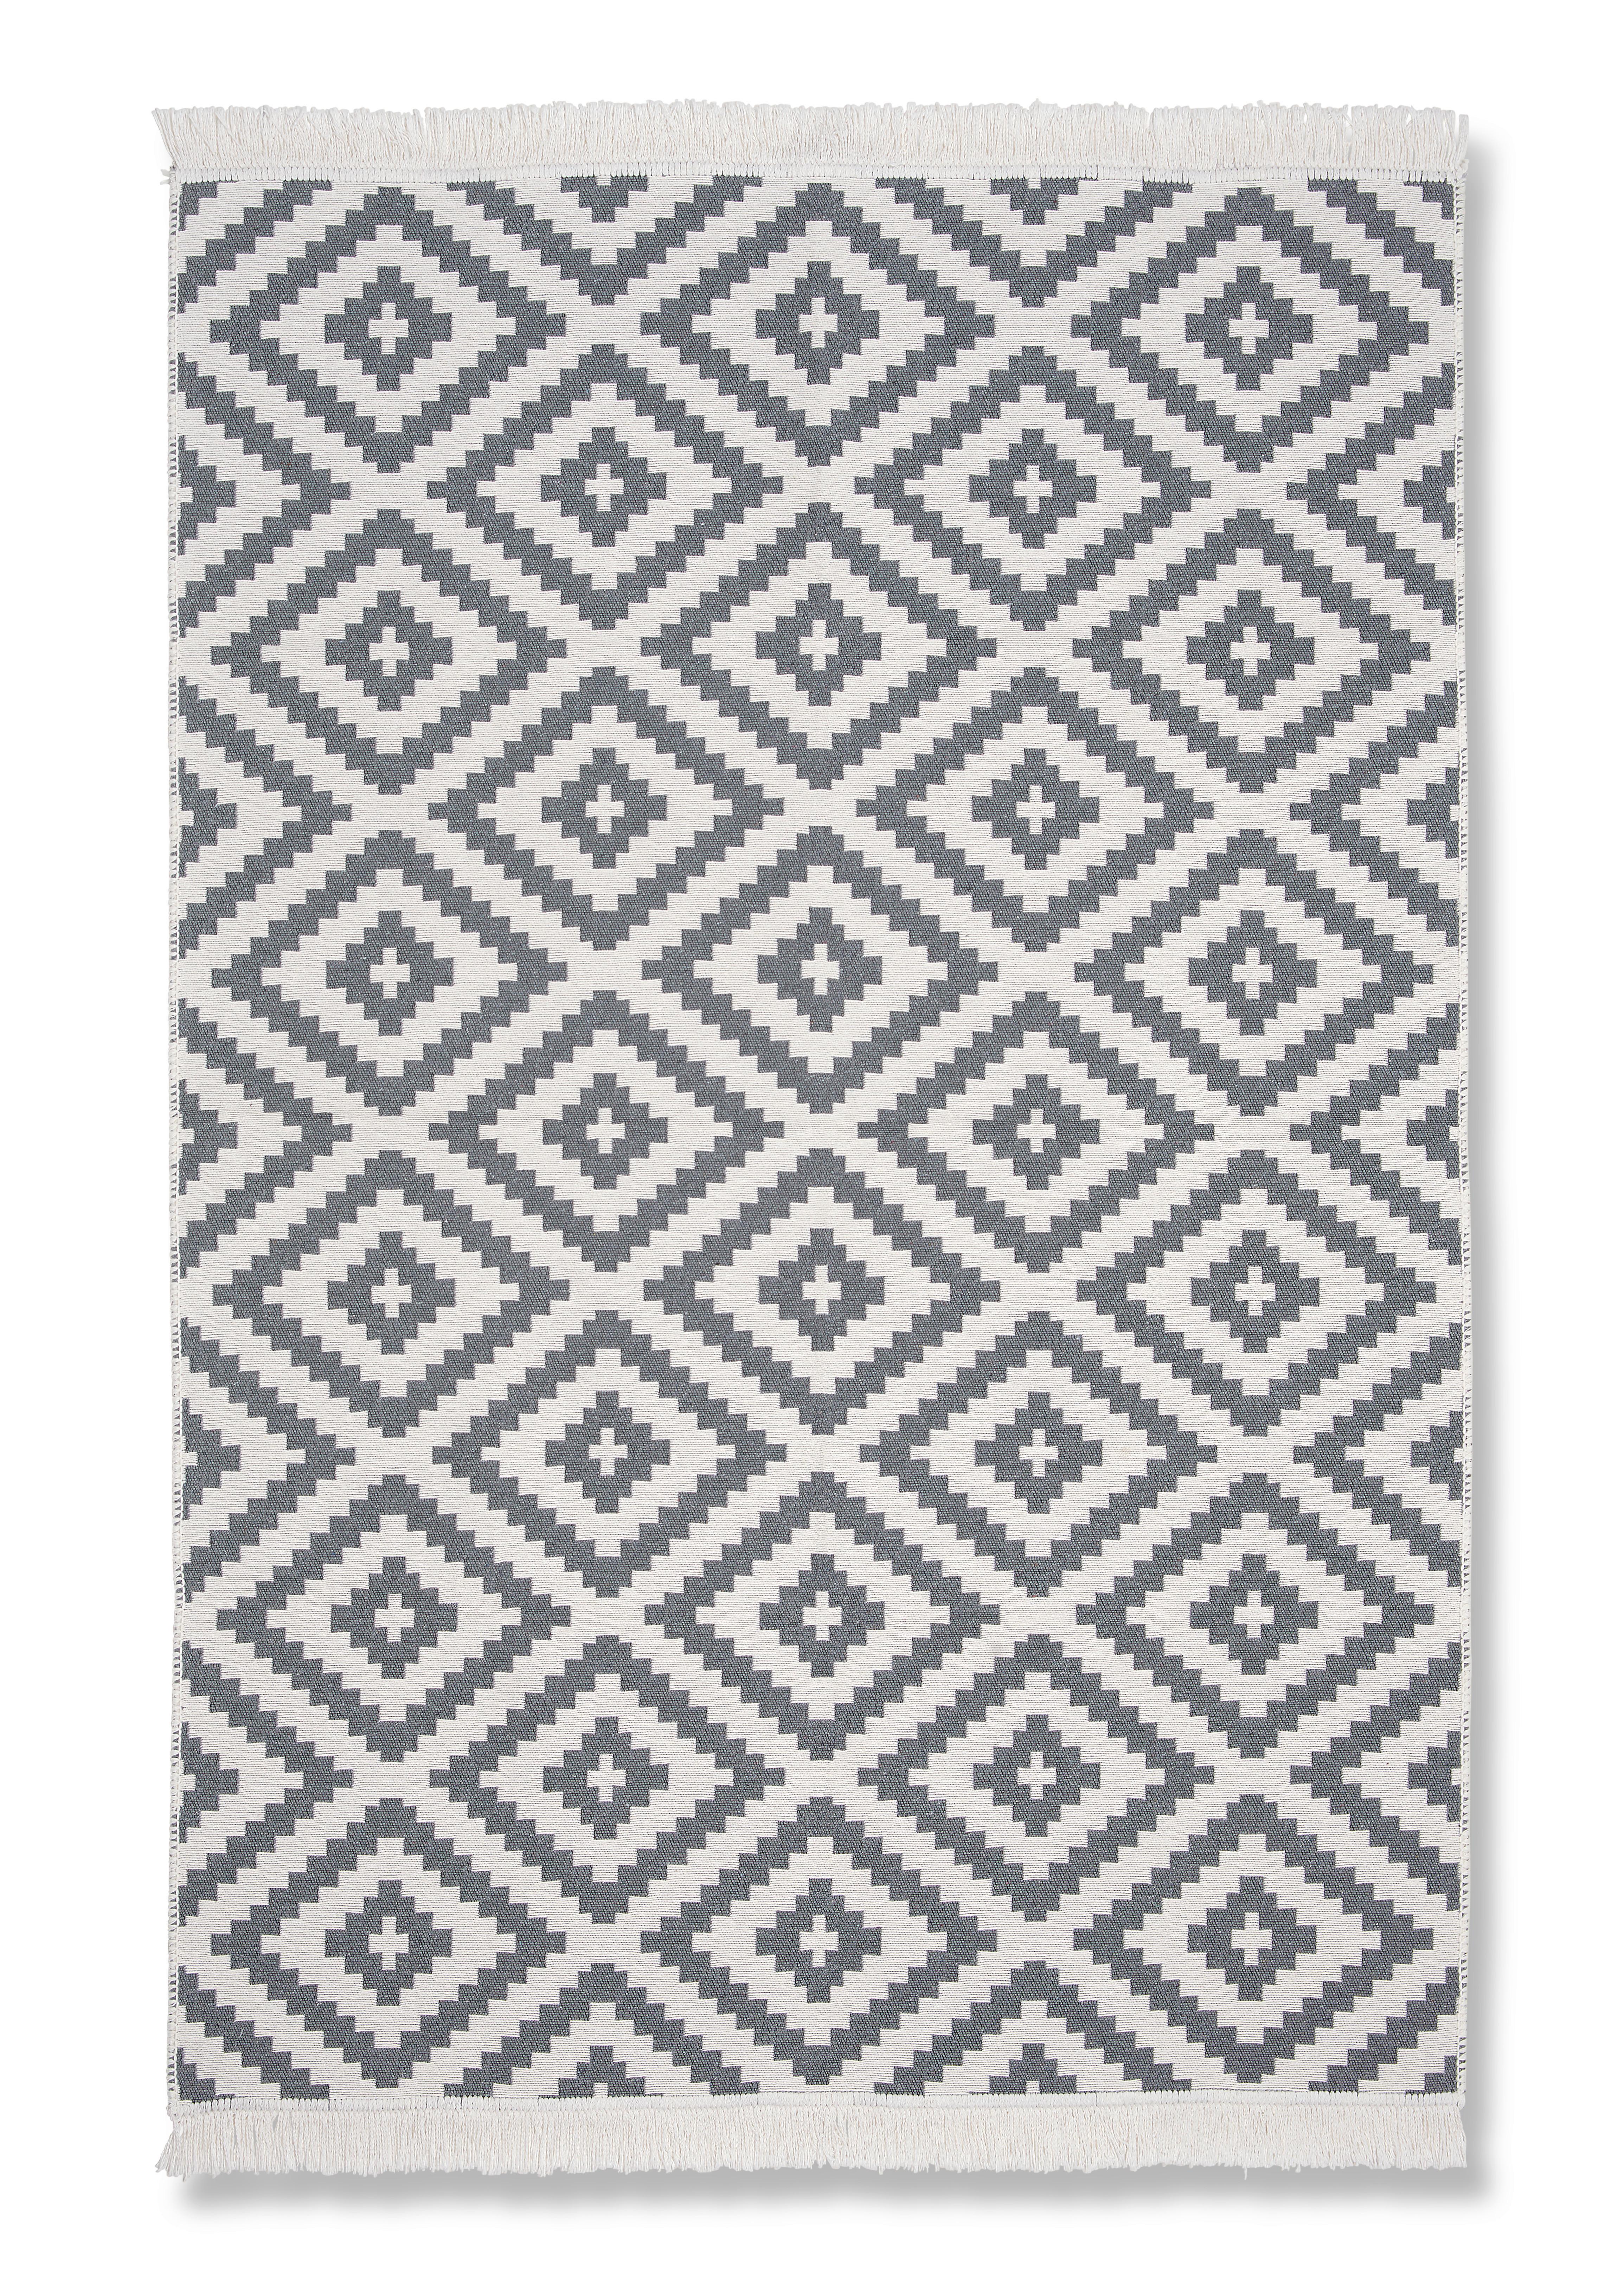 Ročno Tkana Preproga Inaya 1 - bela/antracit, Moderno, tekstil (80/150cm) - Modern Living